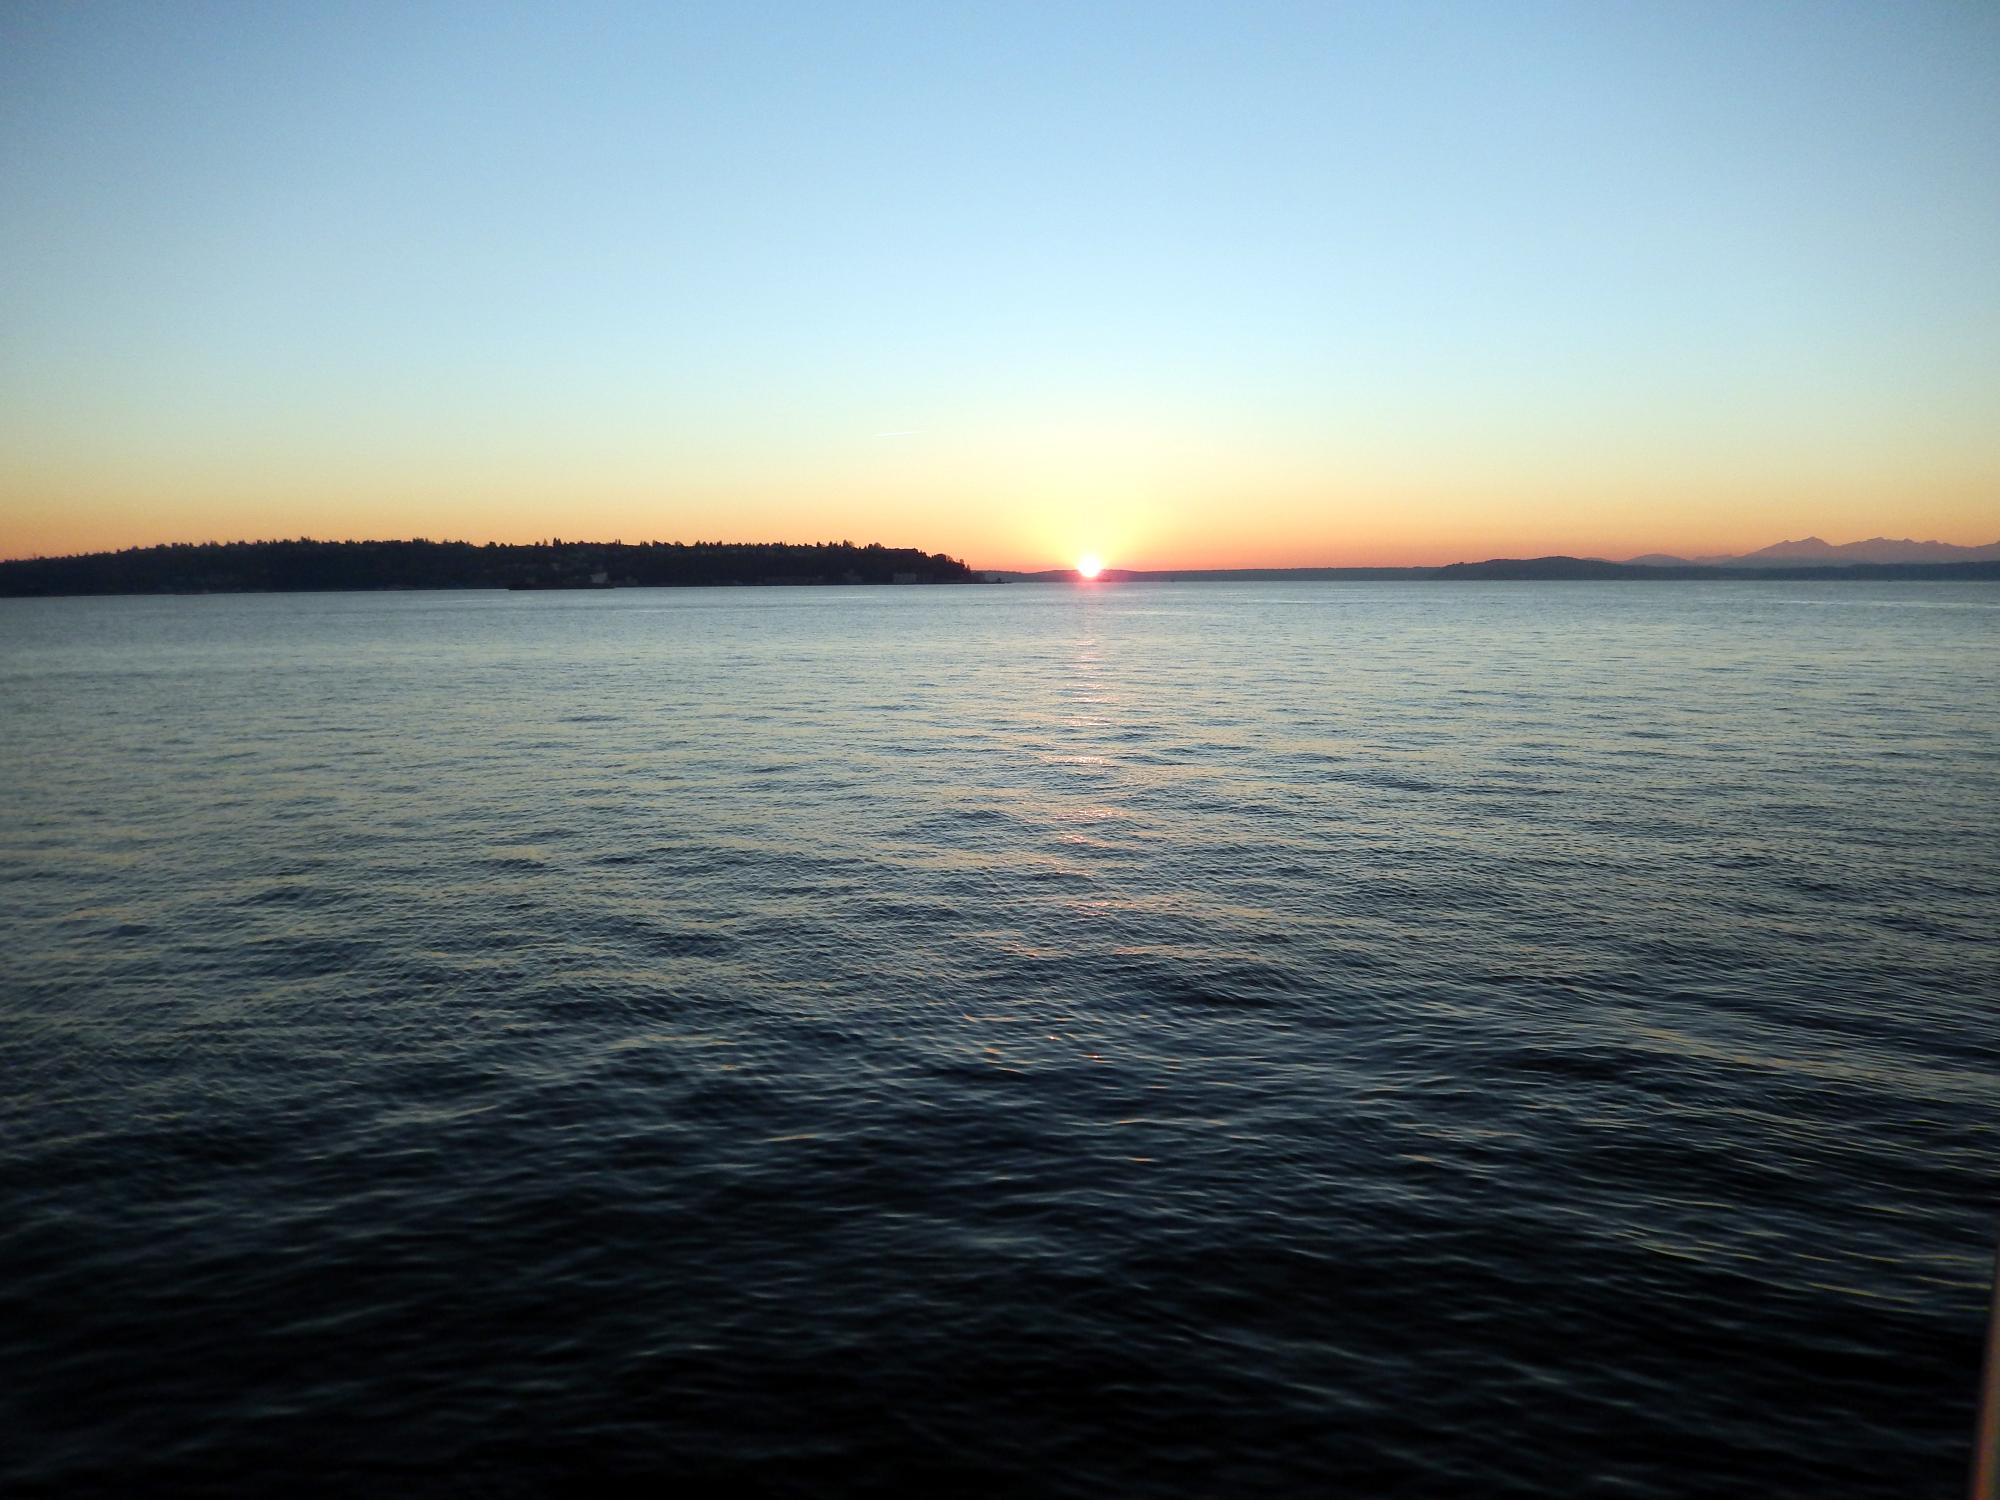 Seattle (2010-2019) - Puget Sound Sunset